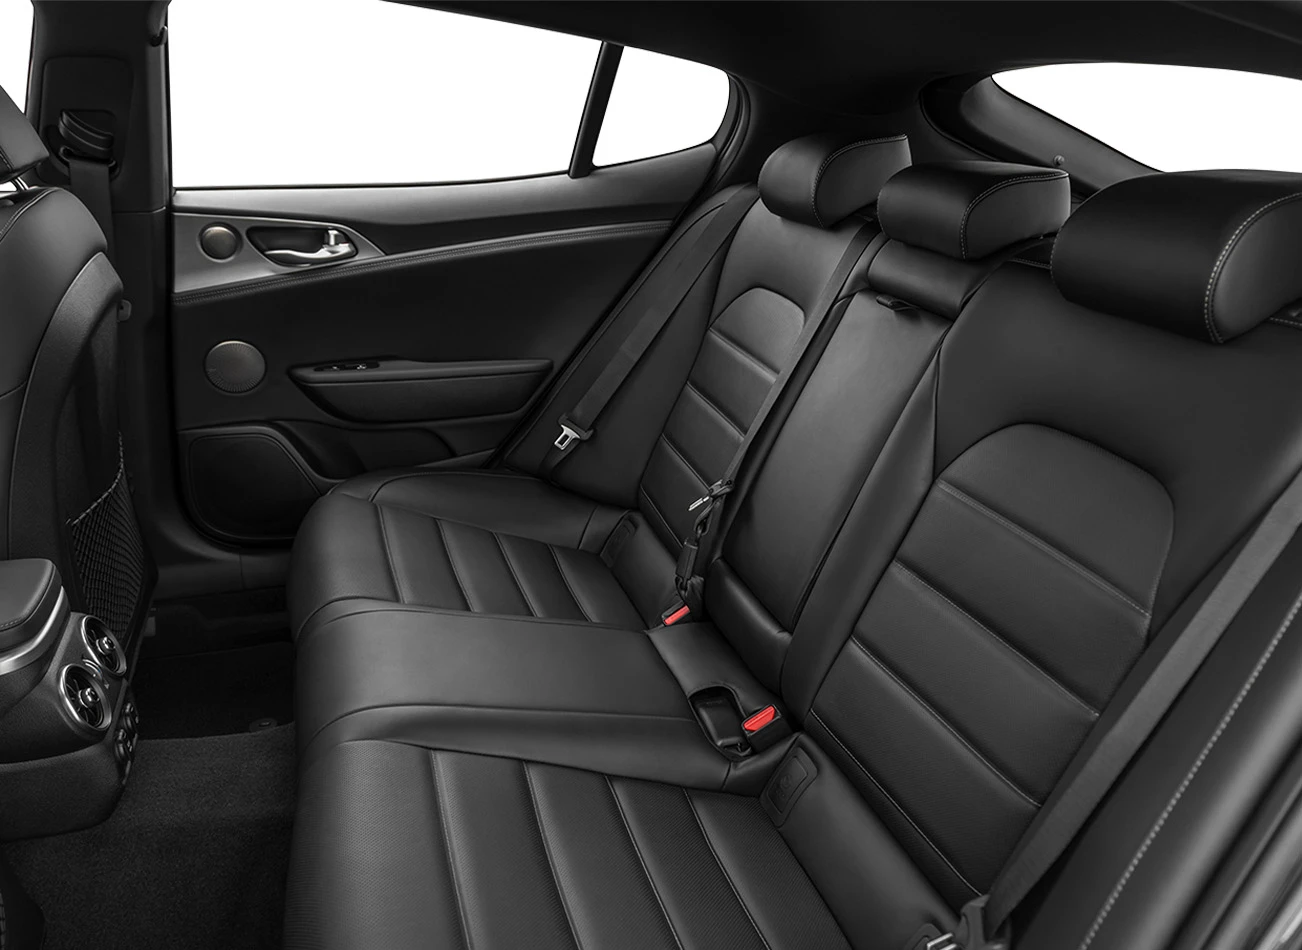 2021 Kia Stinger: Backseats | CarMax